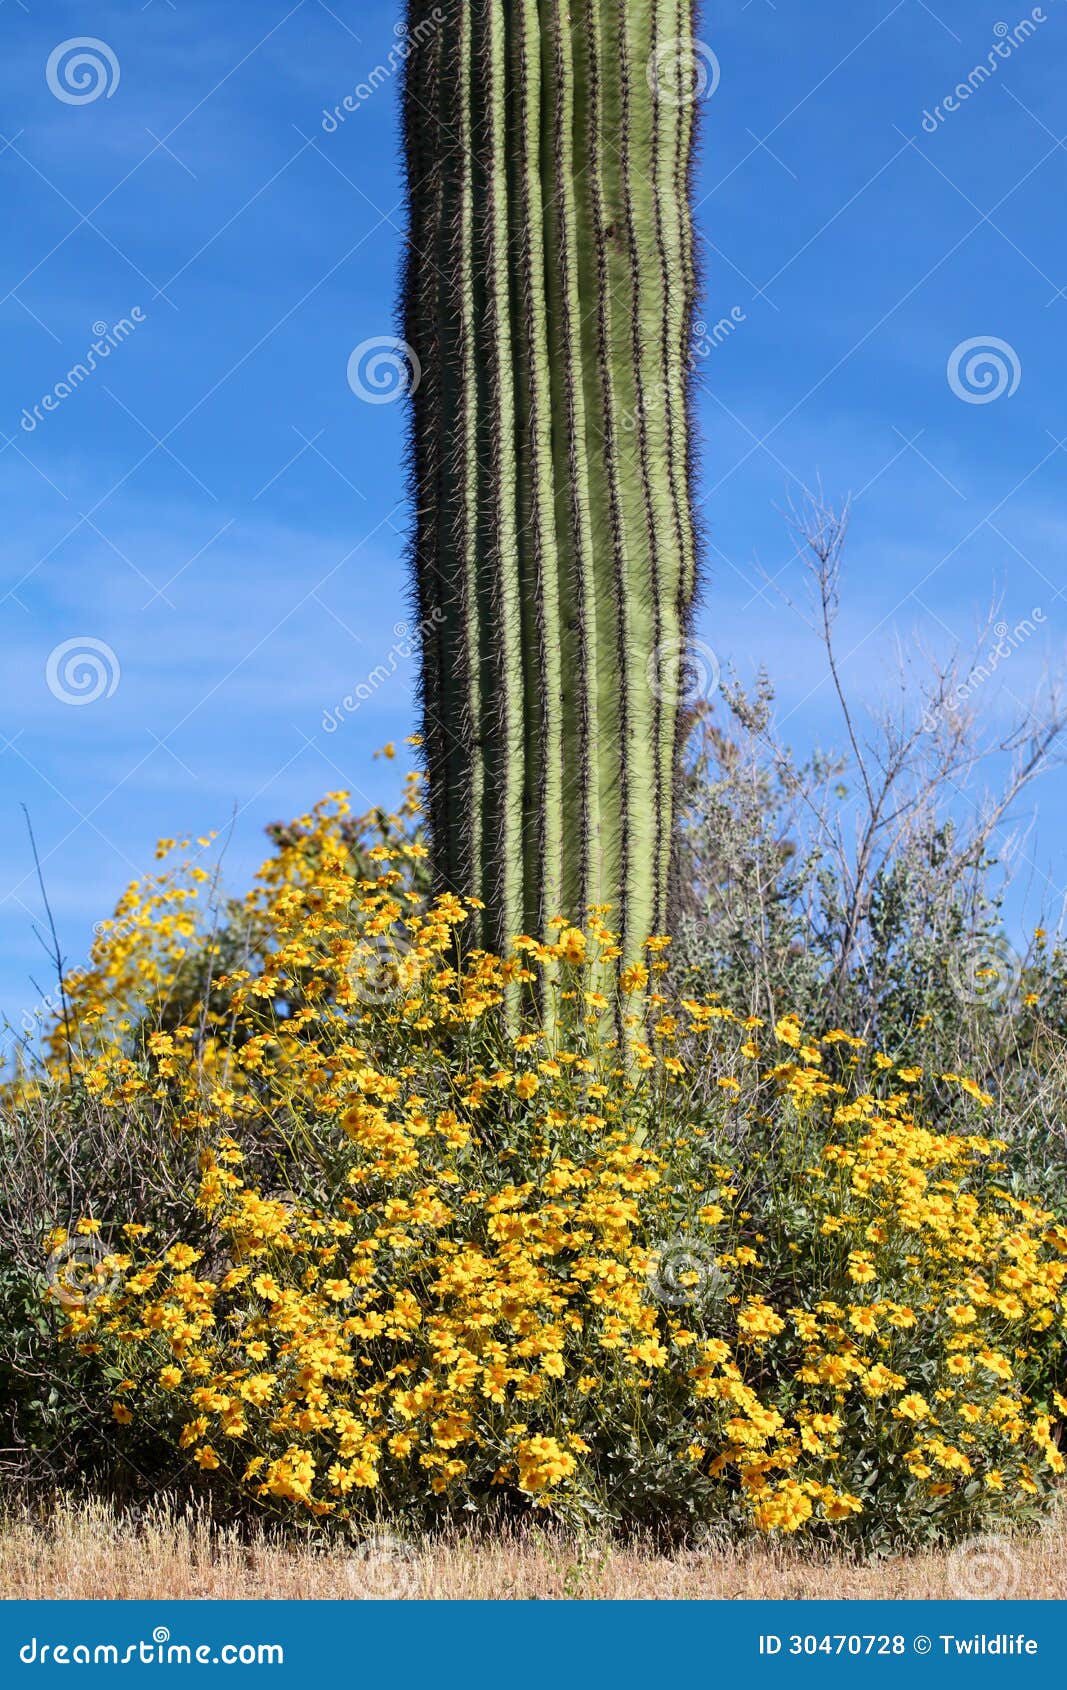 wildflowers and saguaro